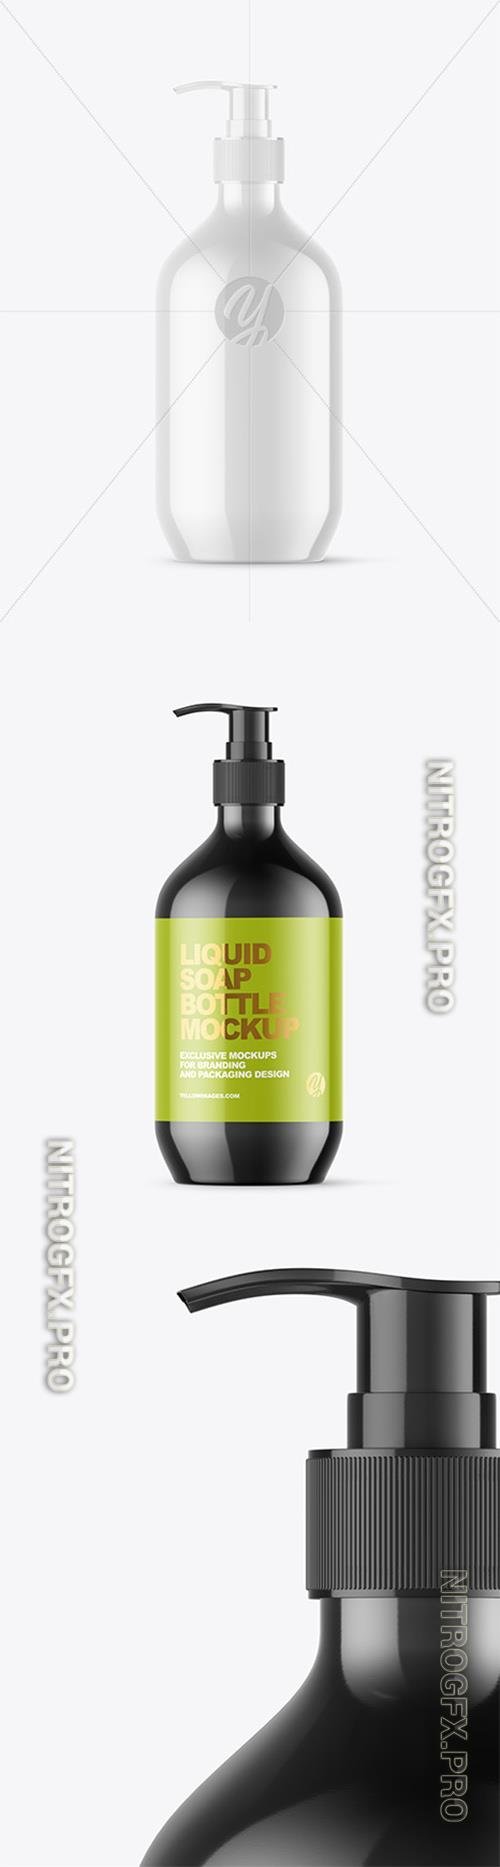 Glossy Liquid Soap Bottle With Pump Mockup 88023